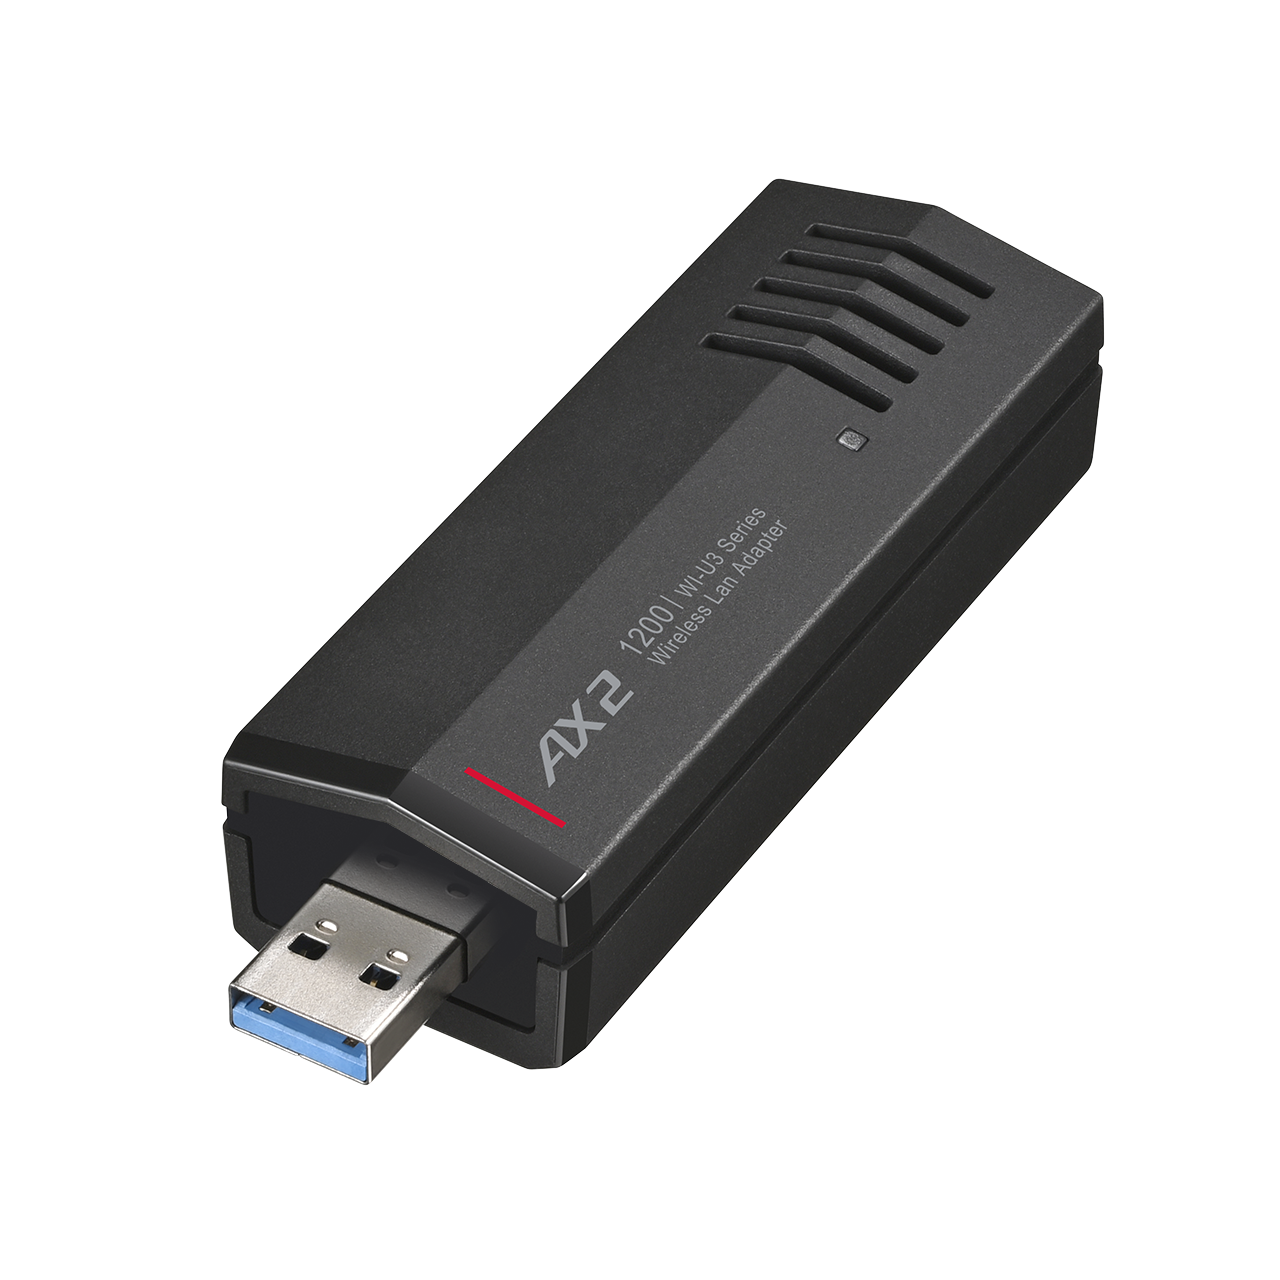 ほぼ新品IO-DATA Wi-Fi6対応 超高速無線LAN子機 USB3.2